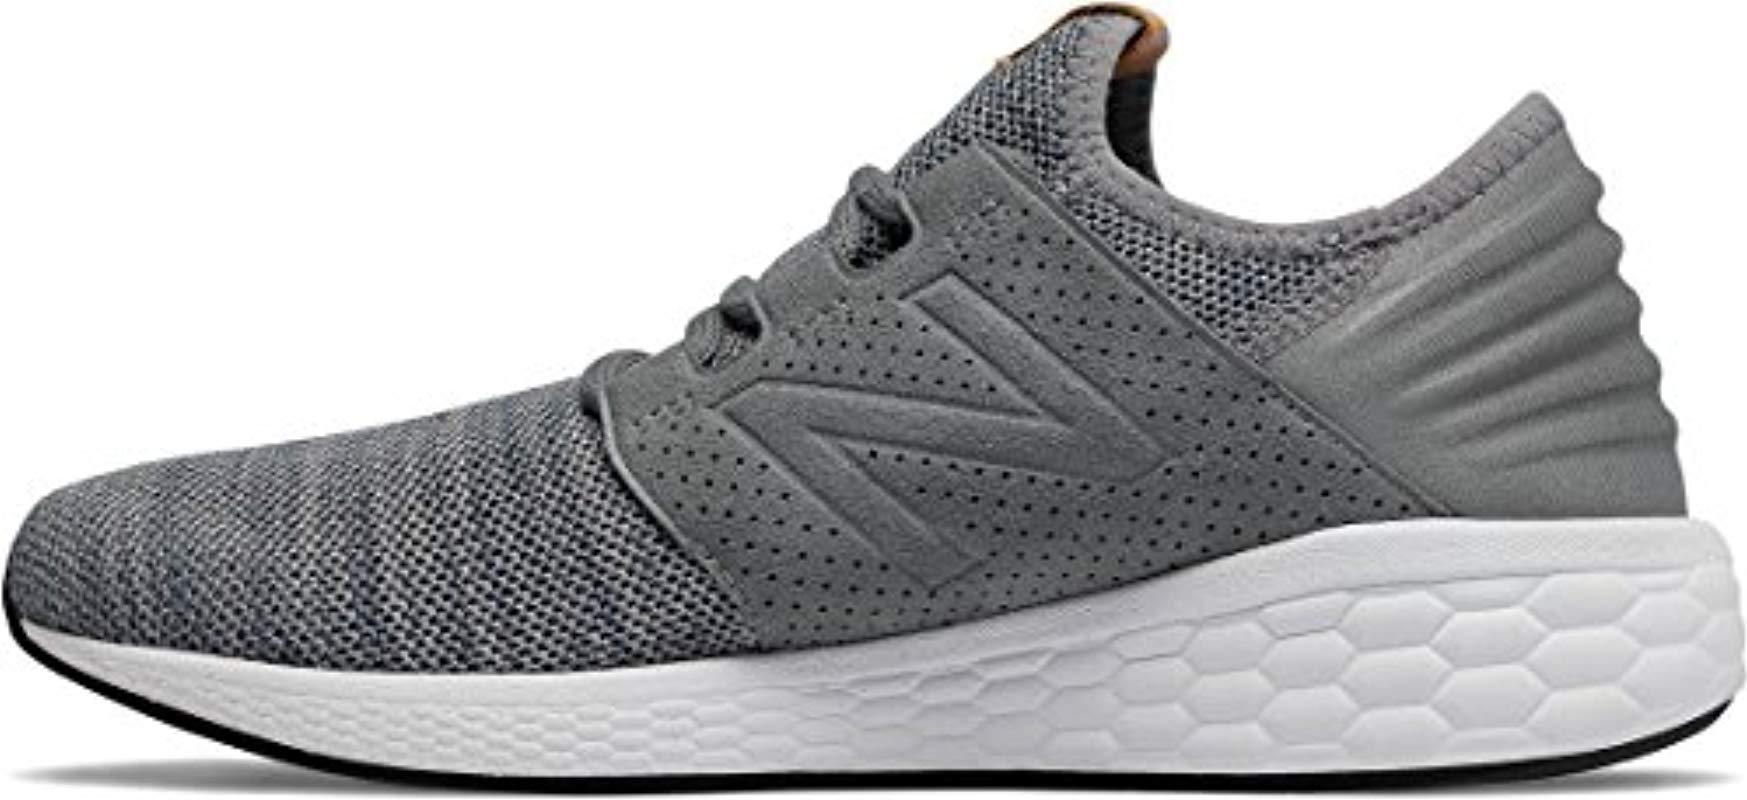 New Balance Cruz V2 Fresh Foam Running Shoe in Gray for Men - Lyst